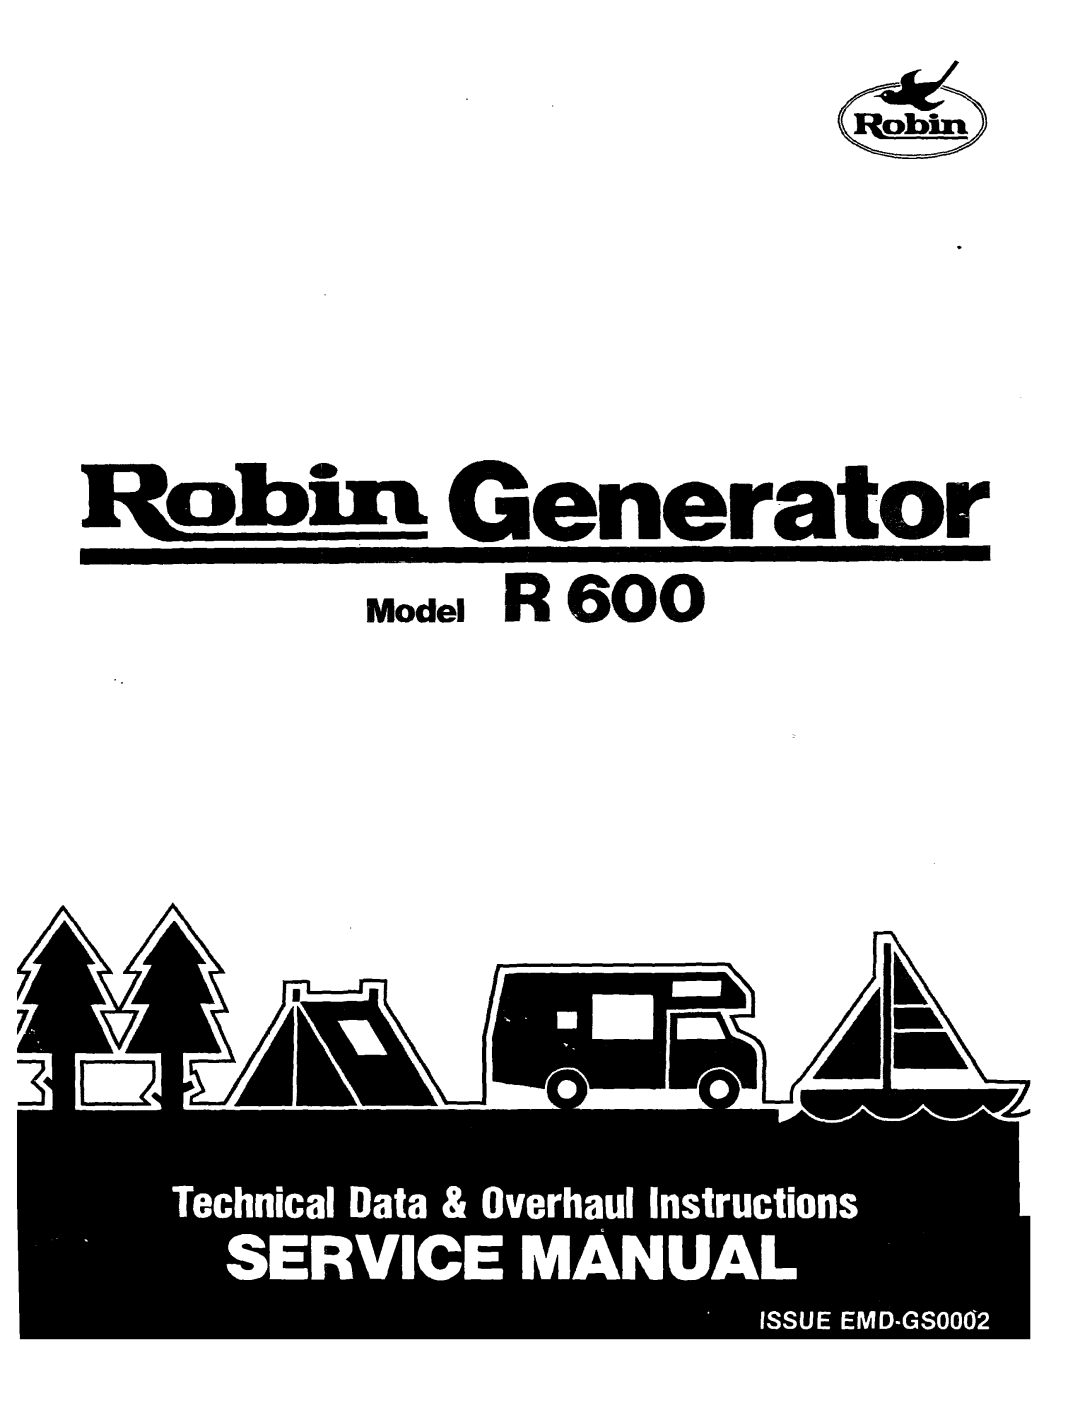 Subaru Robin Power Products R600 manual Model 